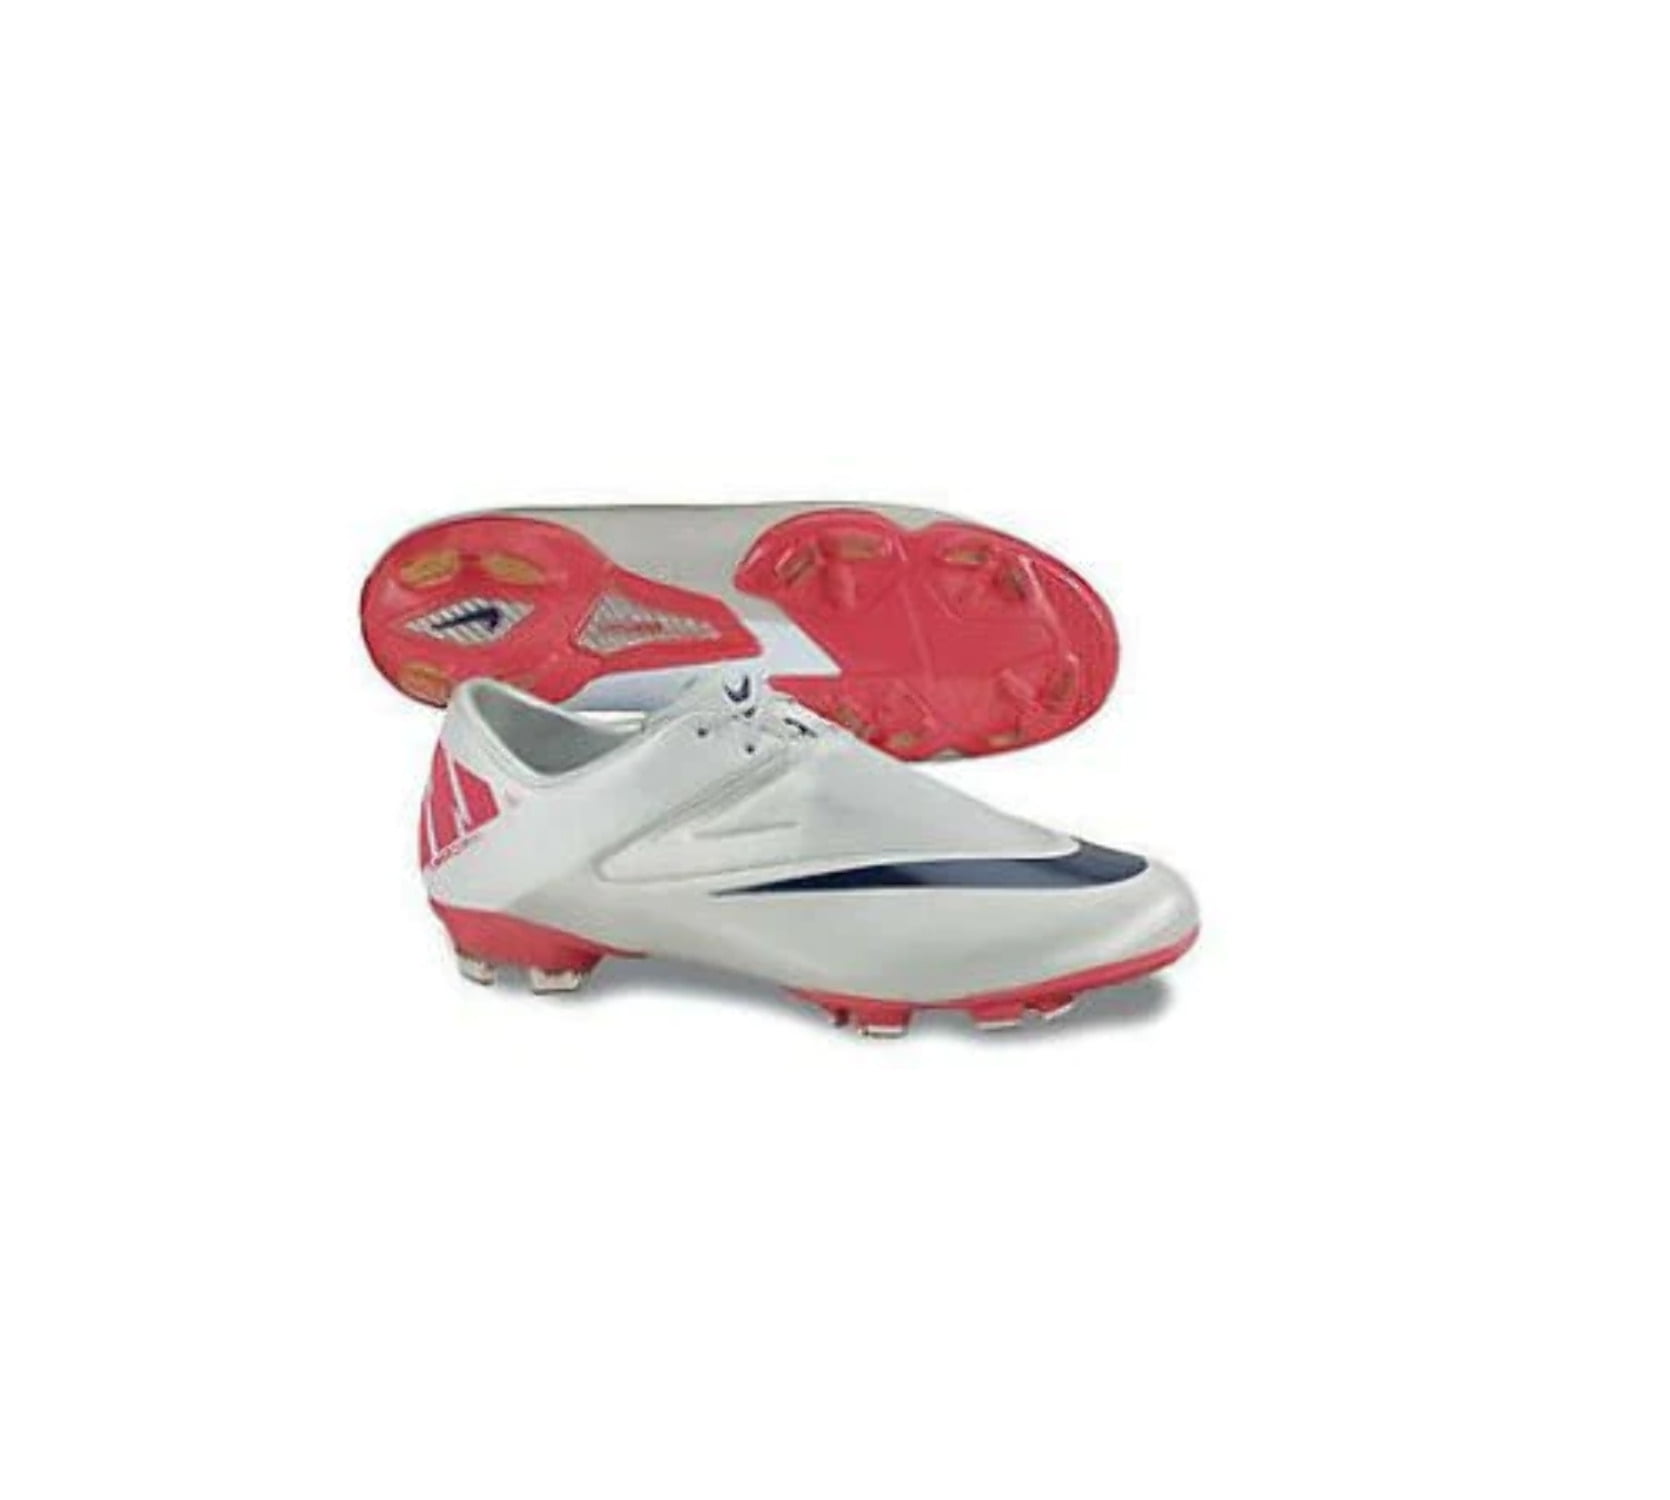 Nike Jr. II FG Soccer Shoes- Granite/White/Solar Red - Walmart.com